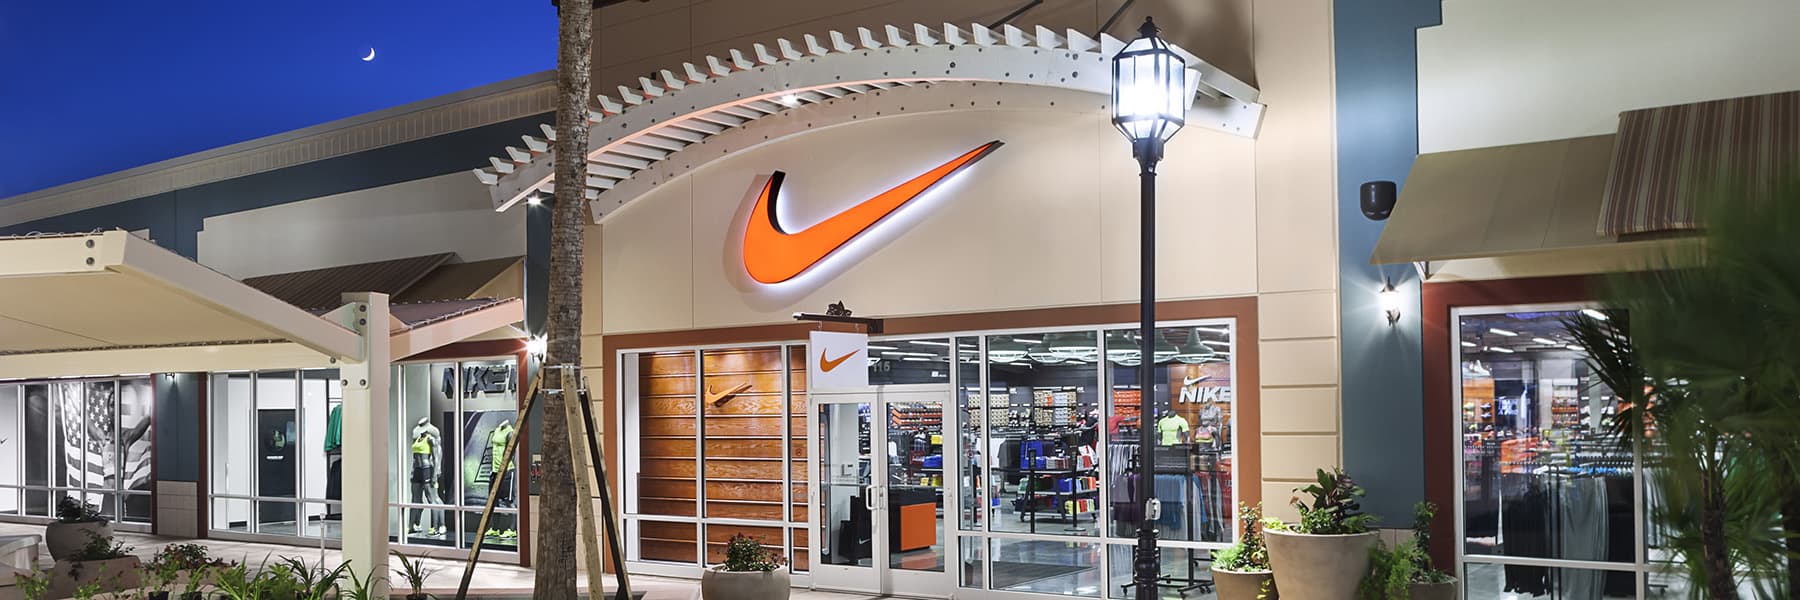 Nike Factory Store - Texas City. Texas City, TX.